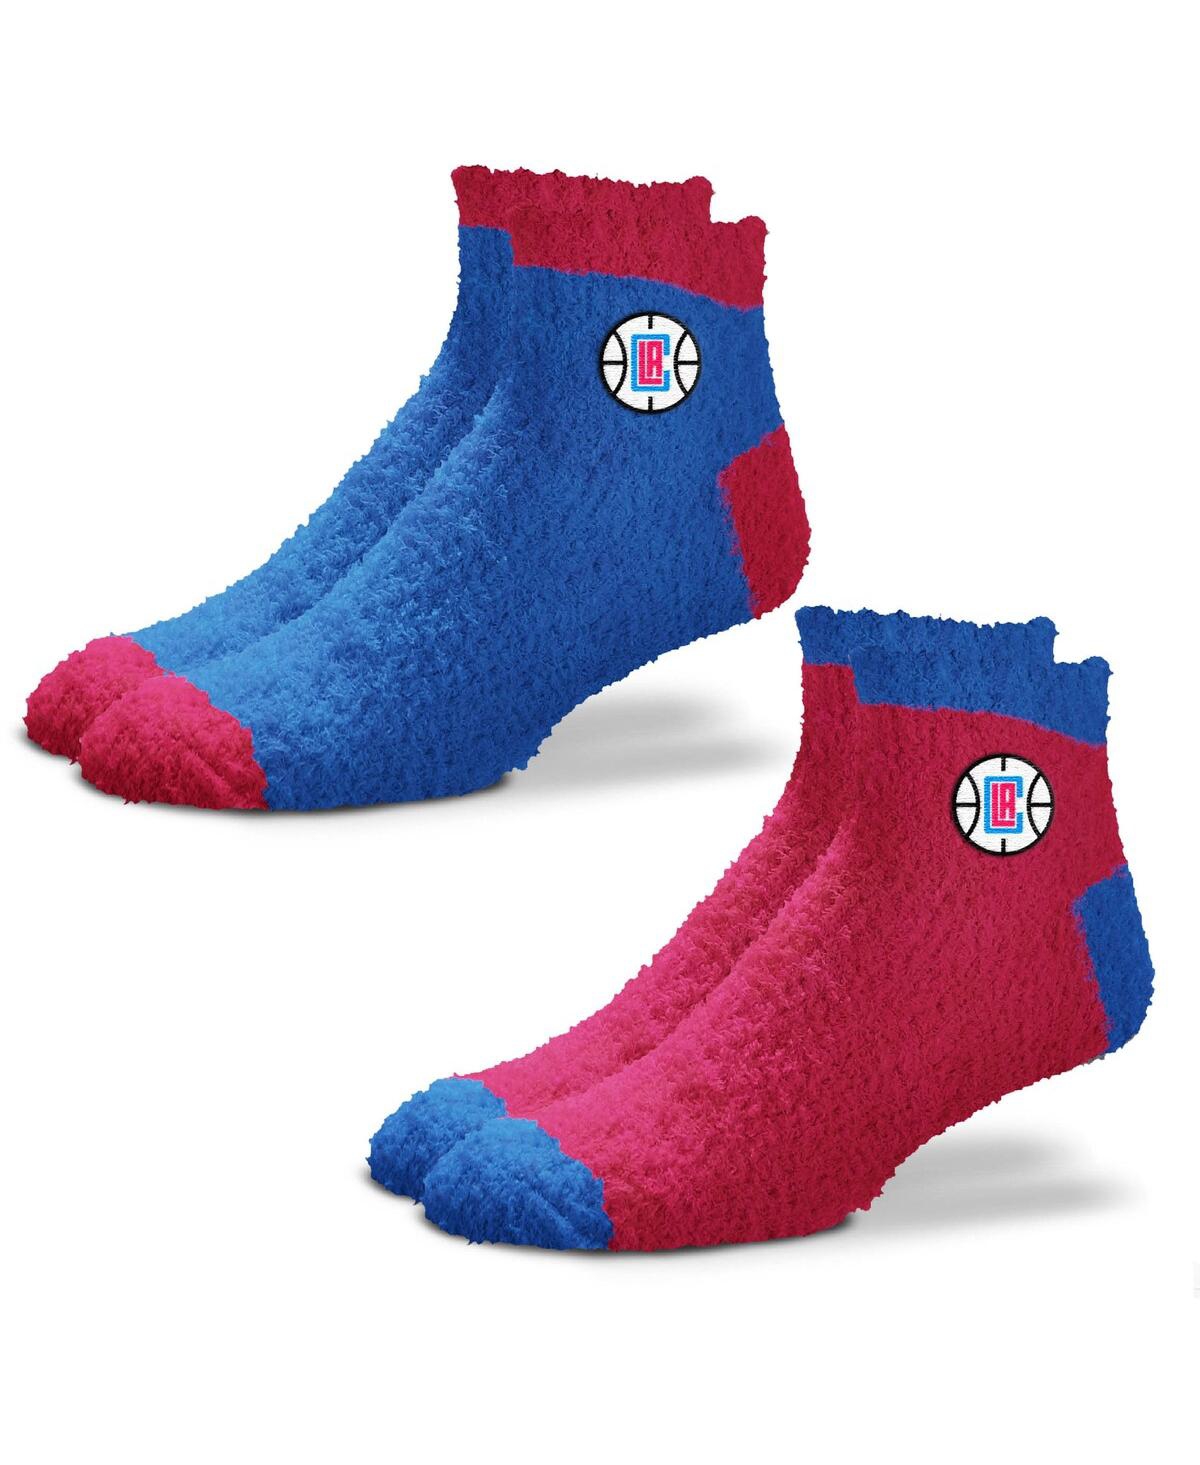 Women's For Bare Feet La Clippers 2-Pack Team Sleep Soft Socks - Red